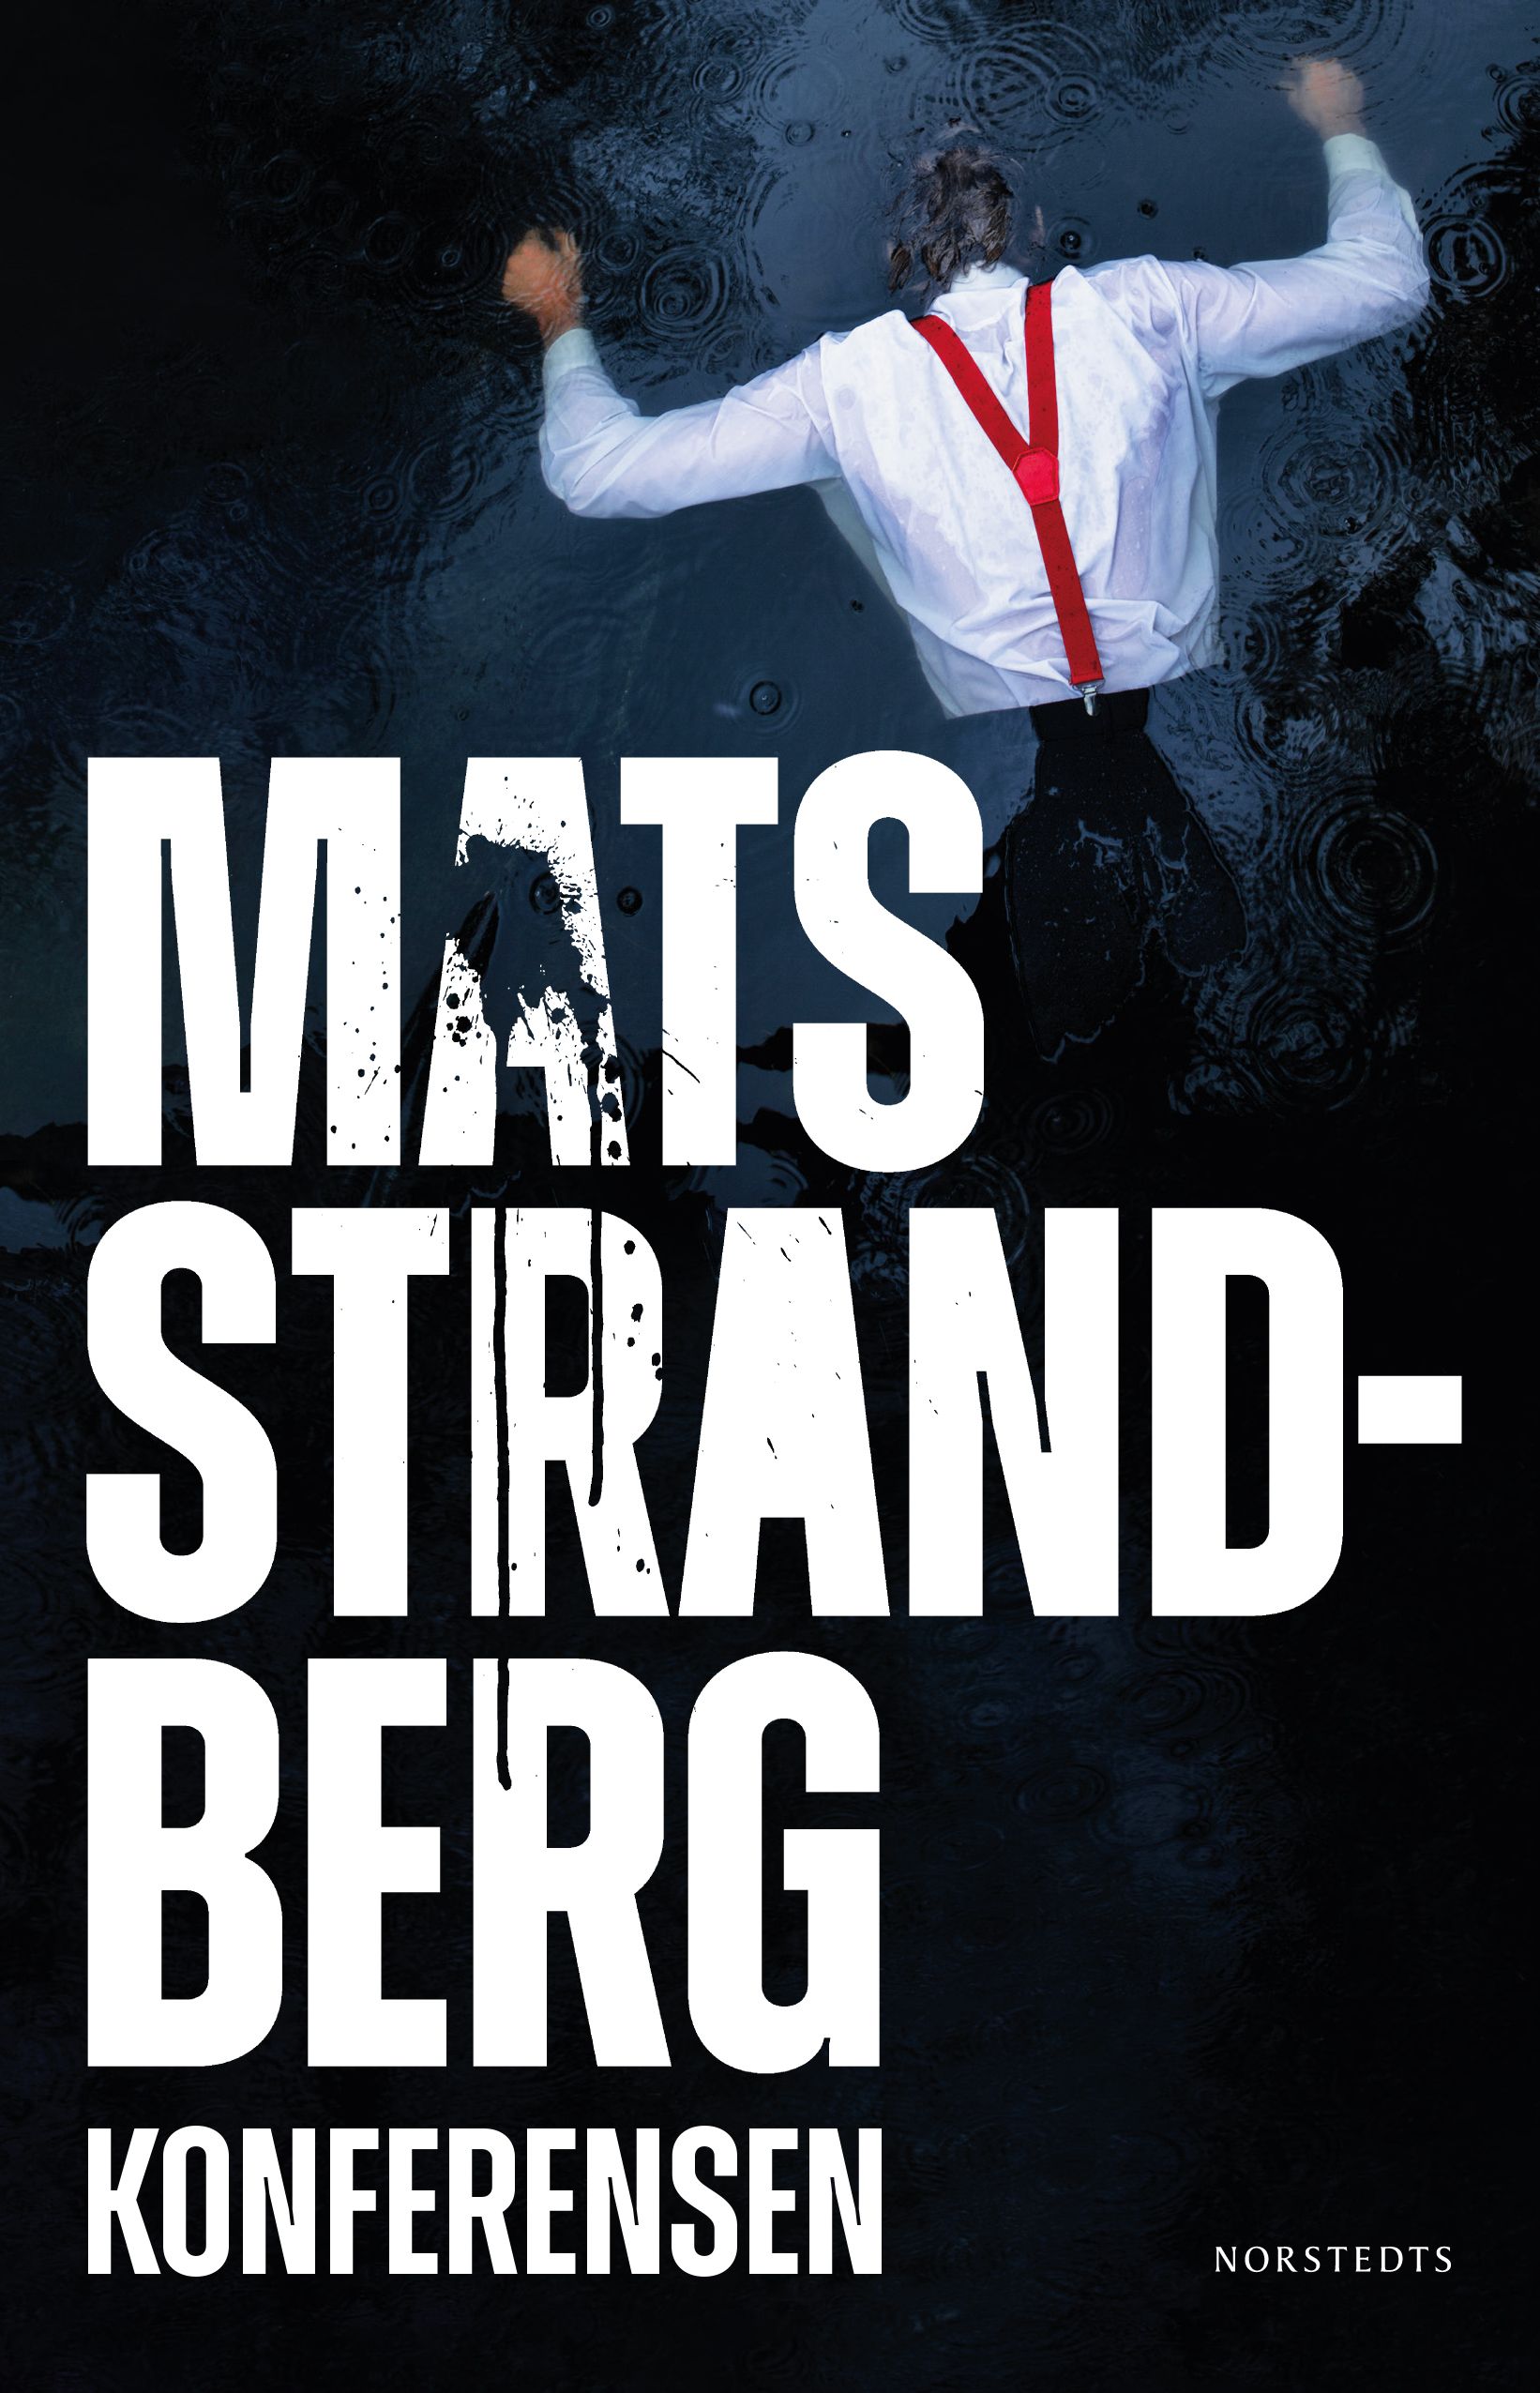 Konferensen, eBook by Mats Strandberg